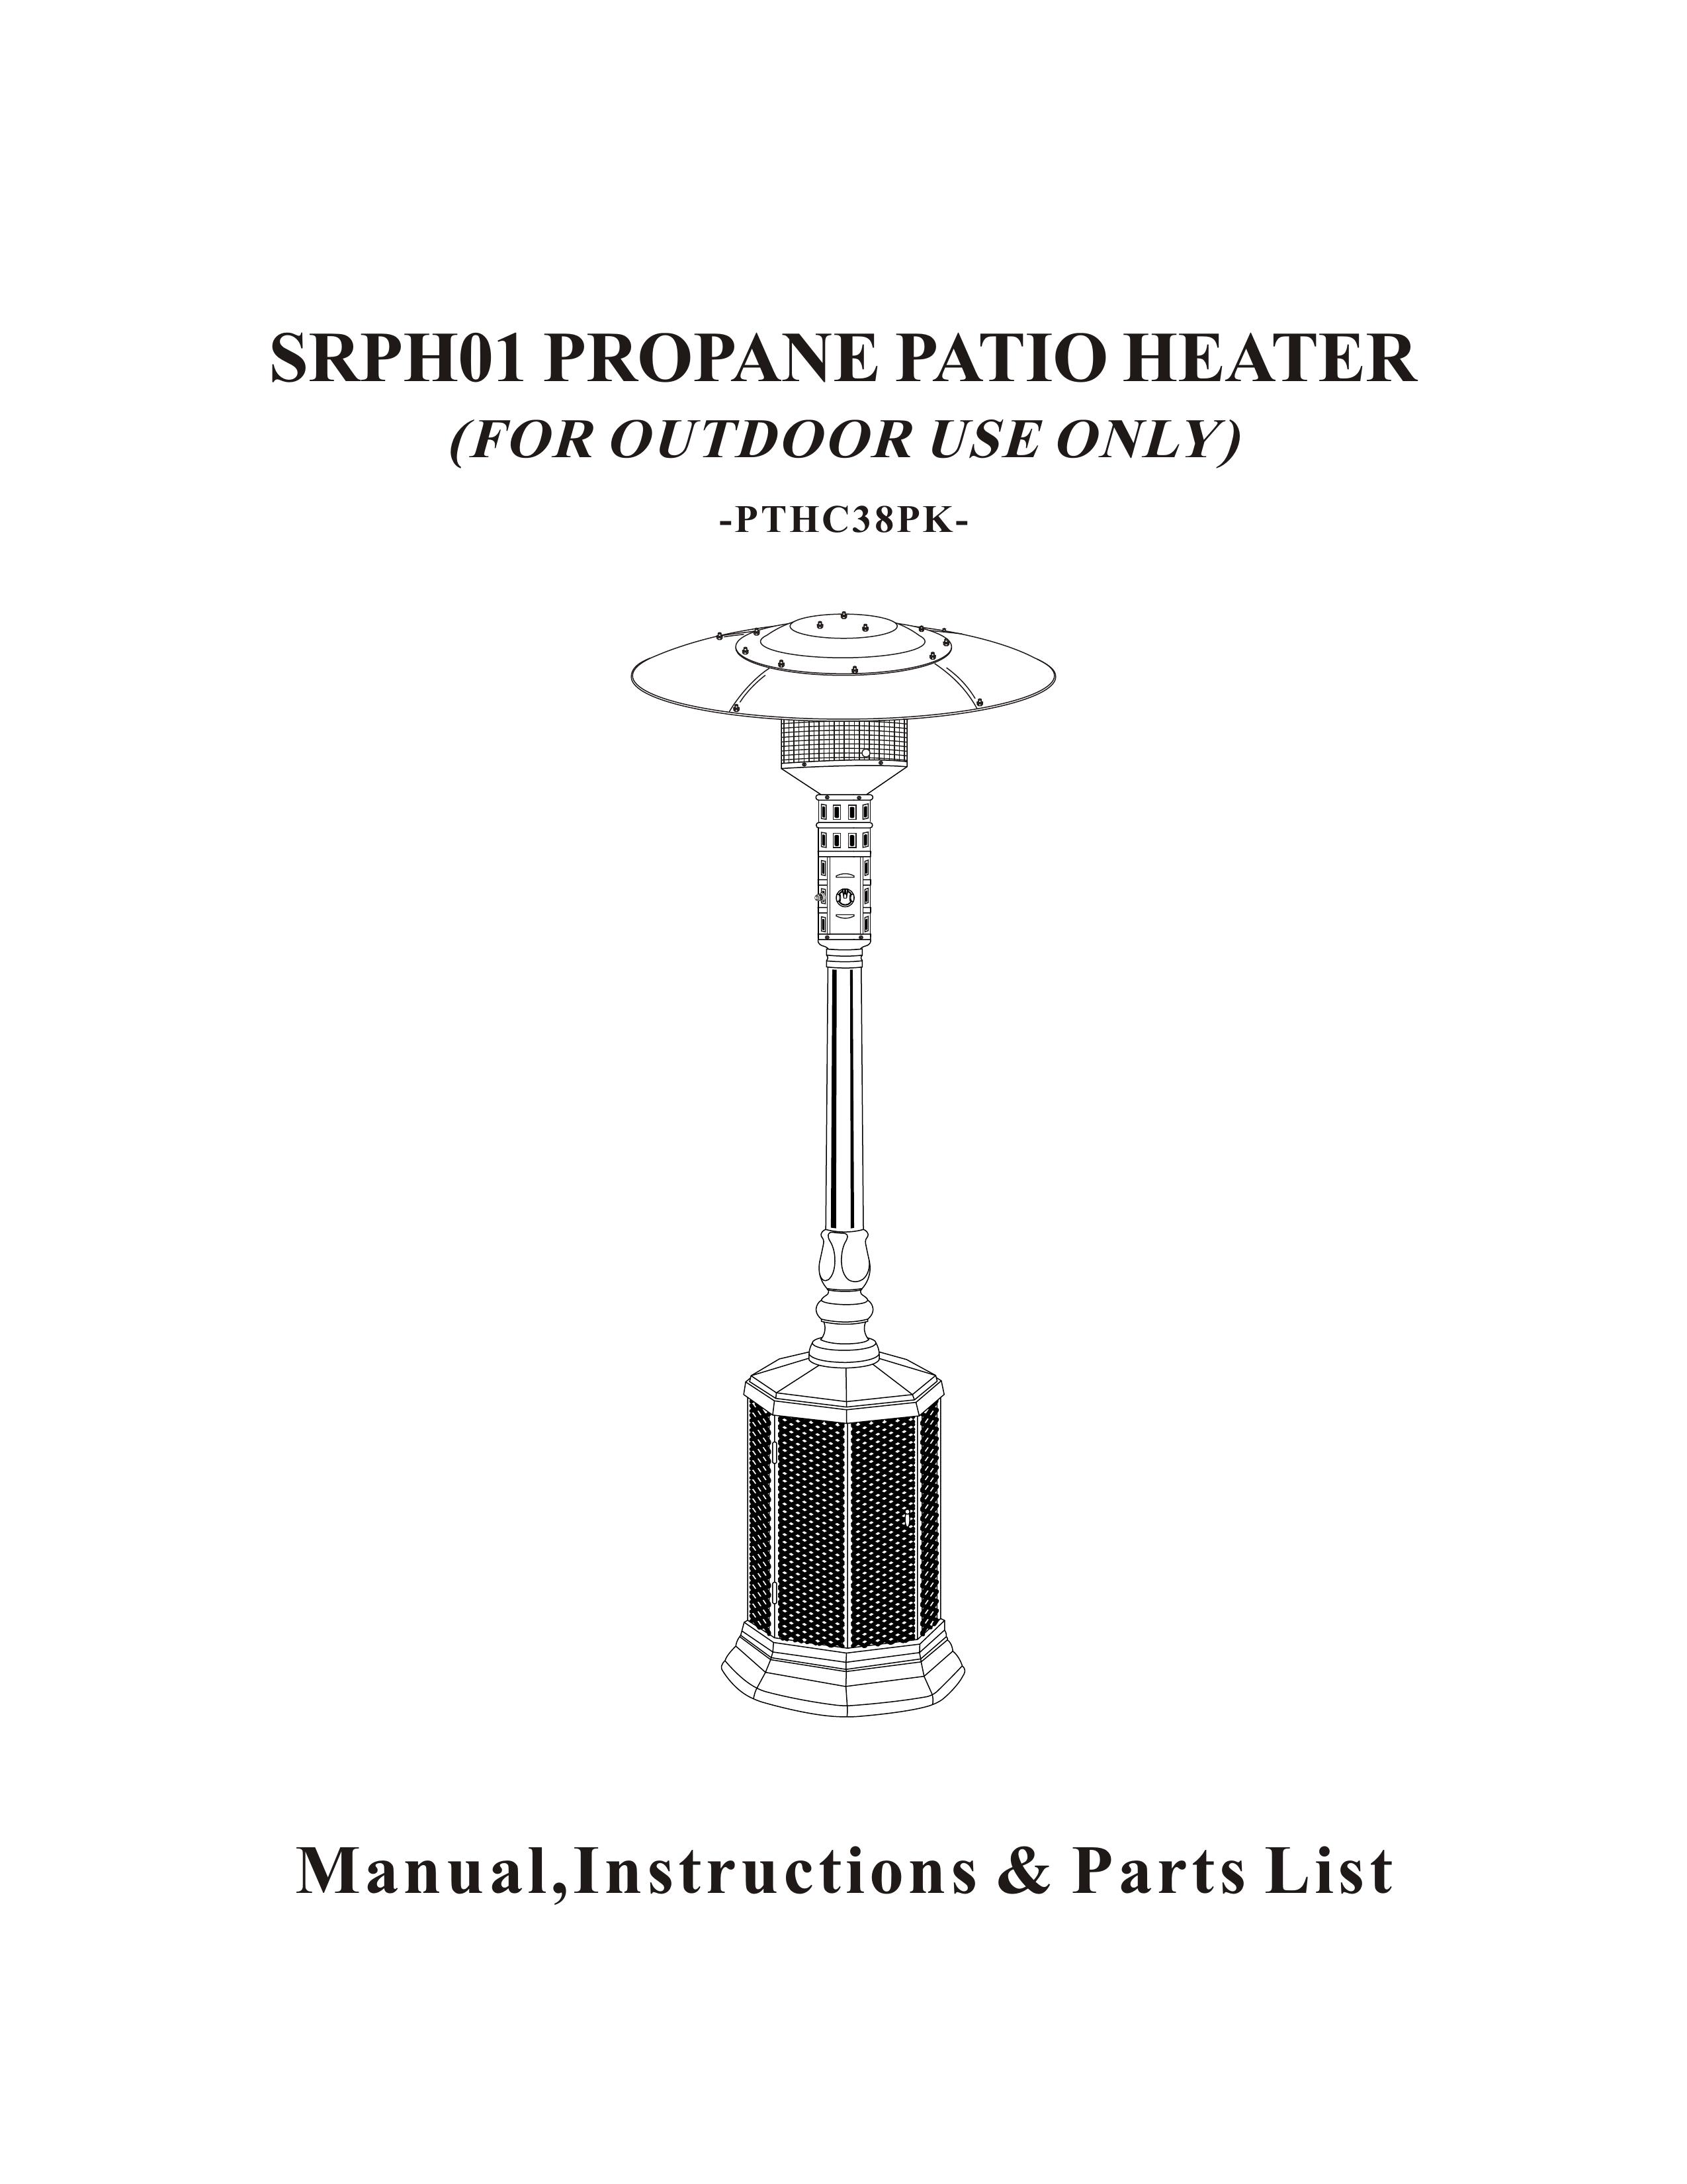 Napoleon Grills PTHC38PK Patio Heater User Manual